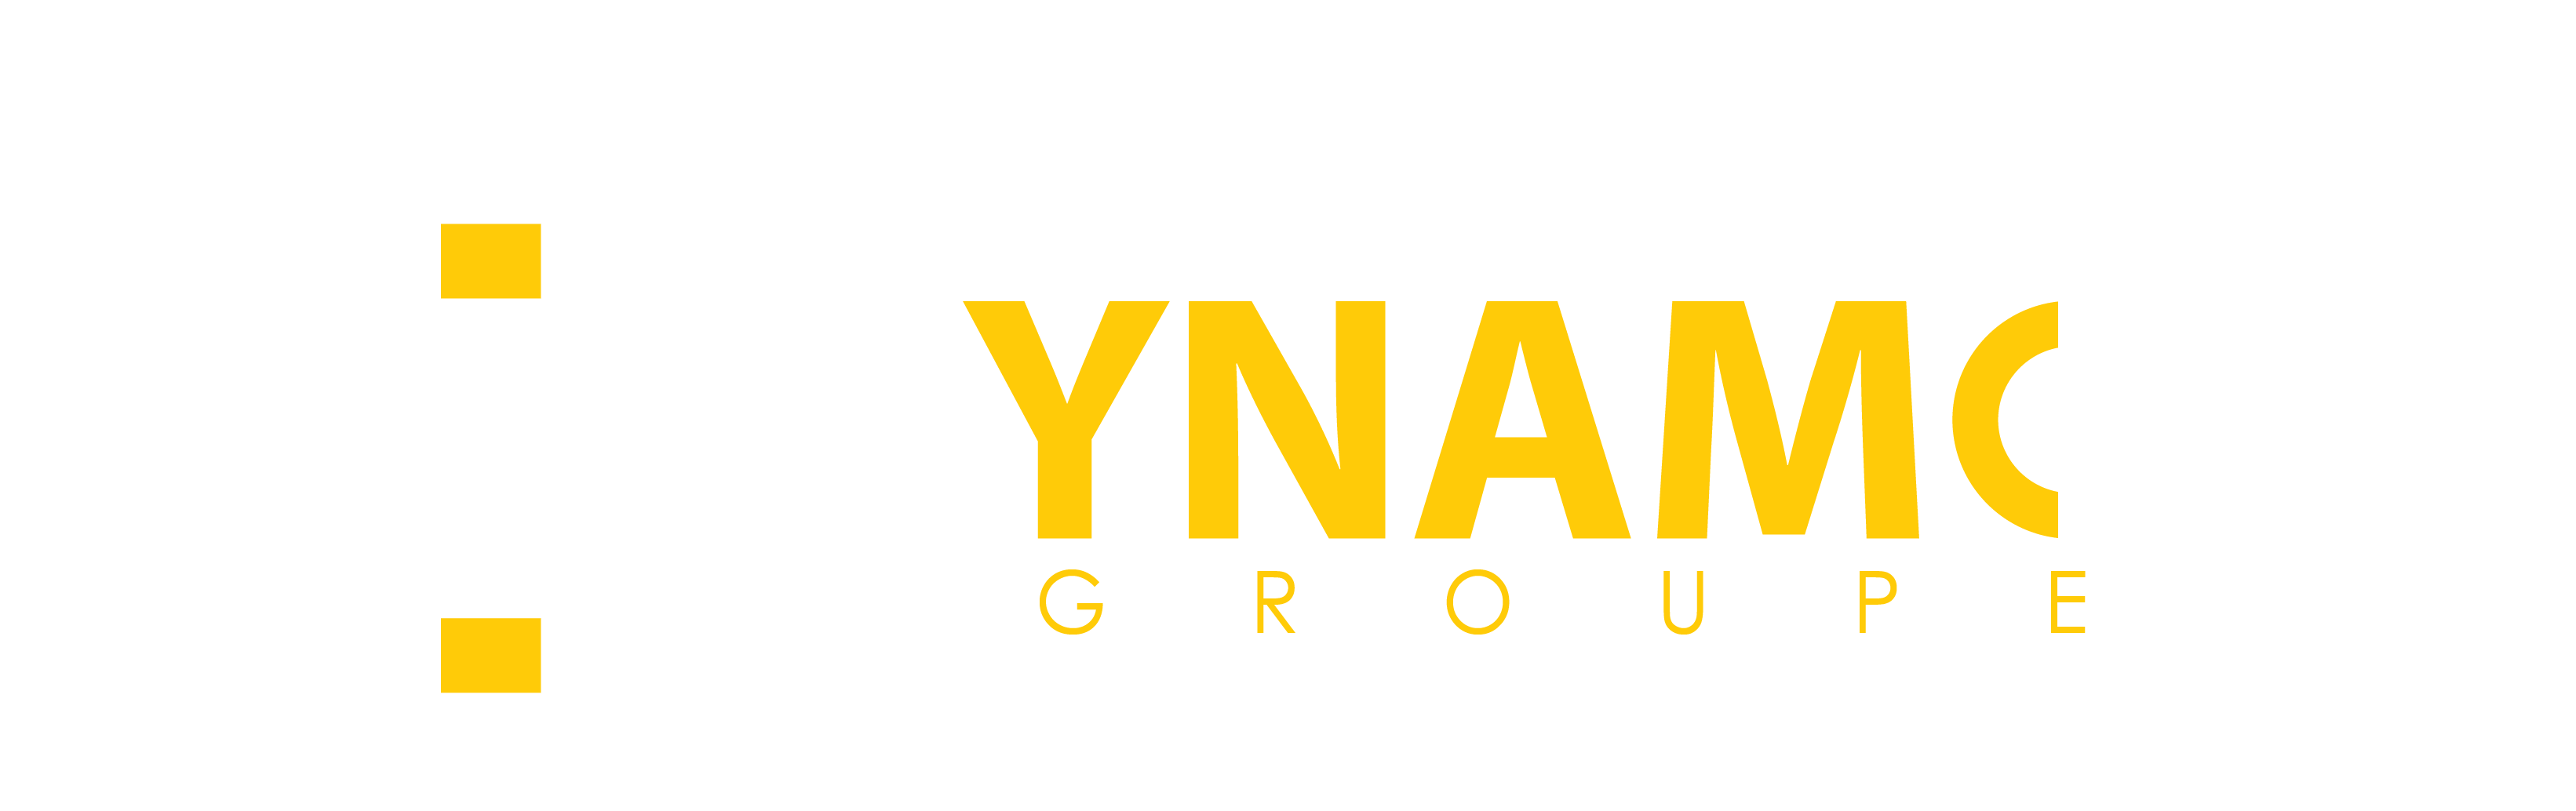 Dynamo groupe